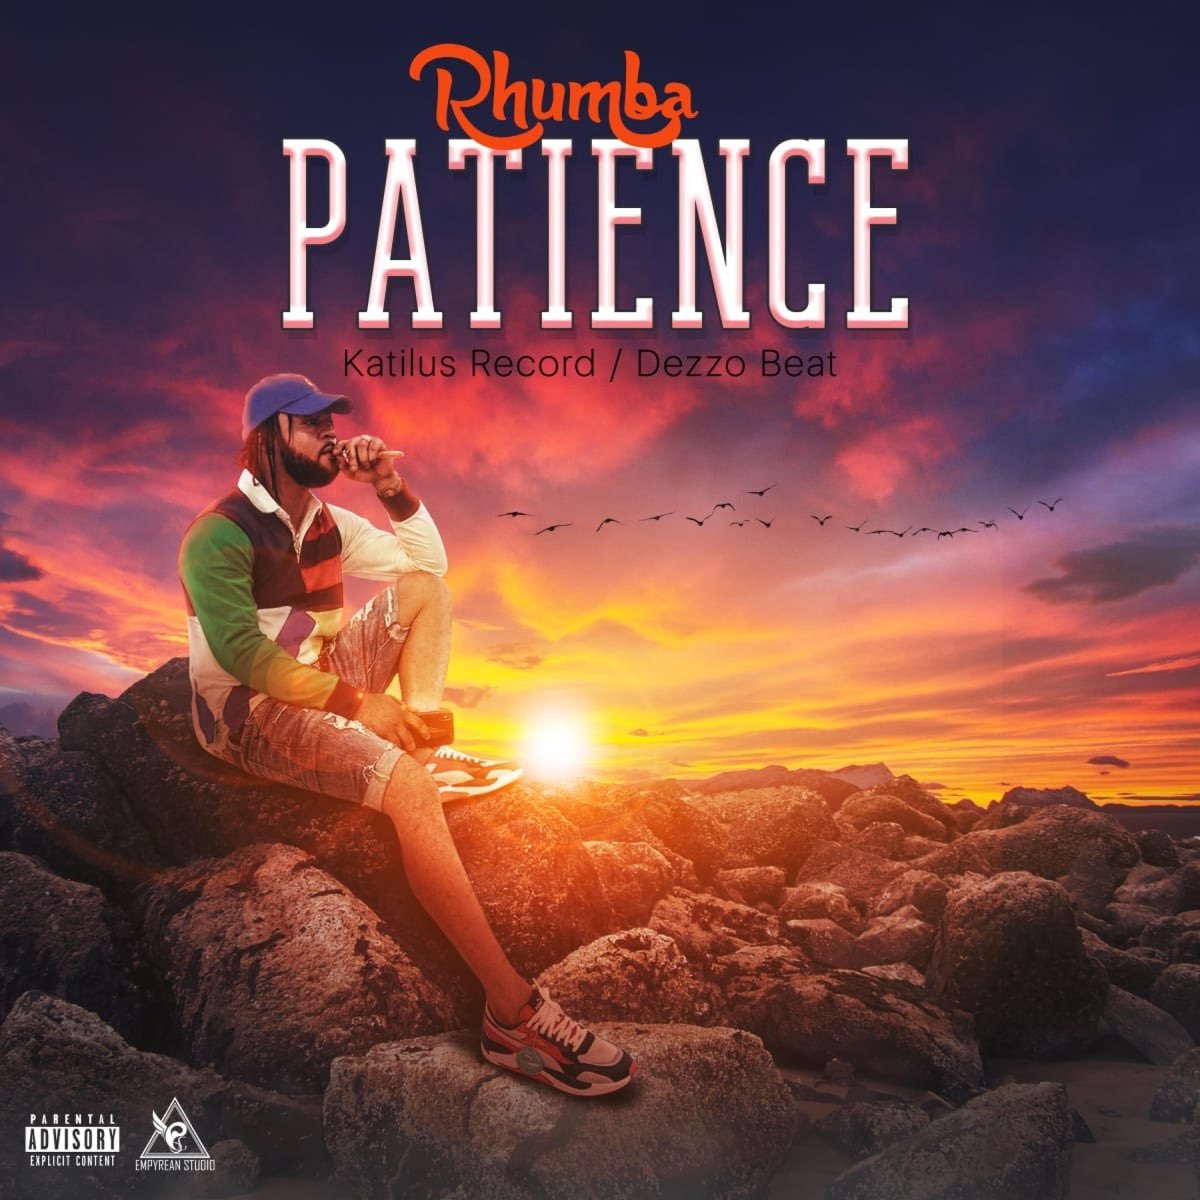 Patience - Rhumba